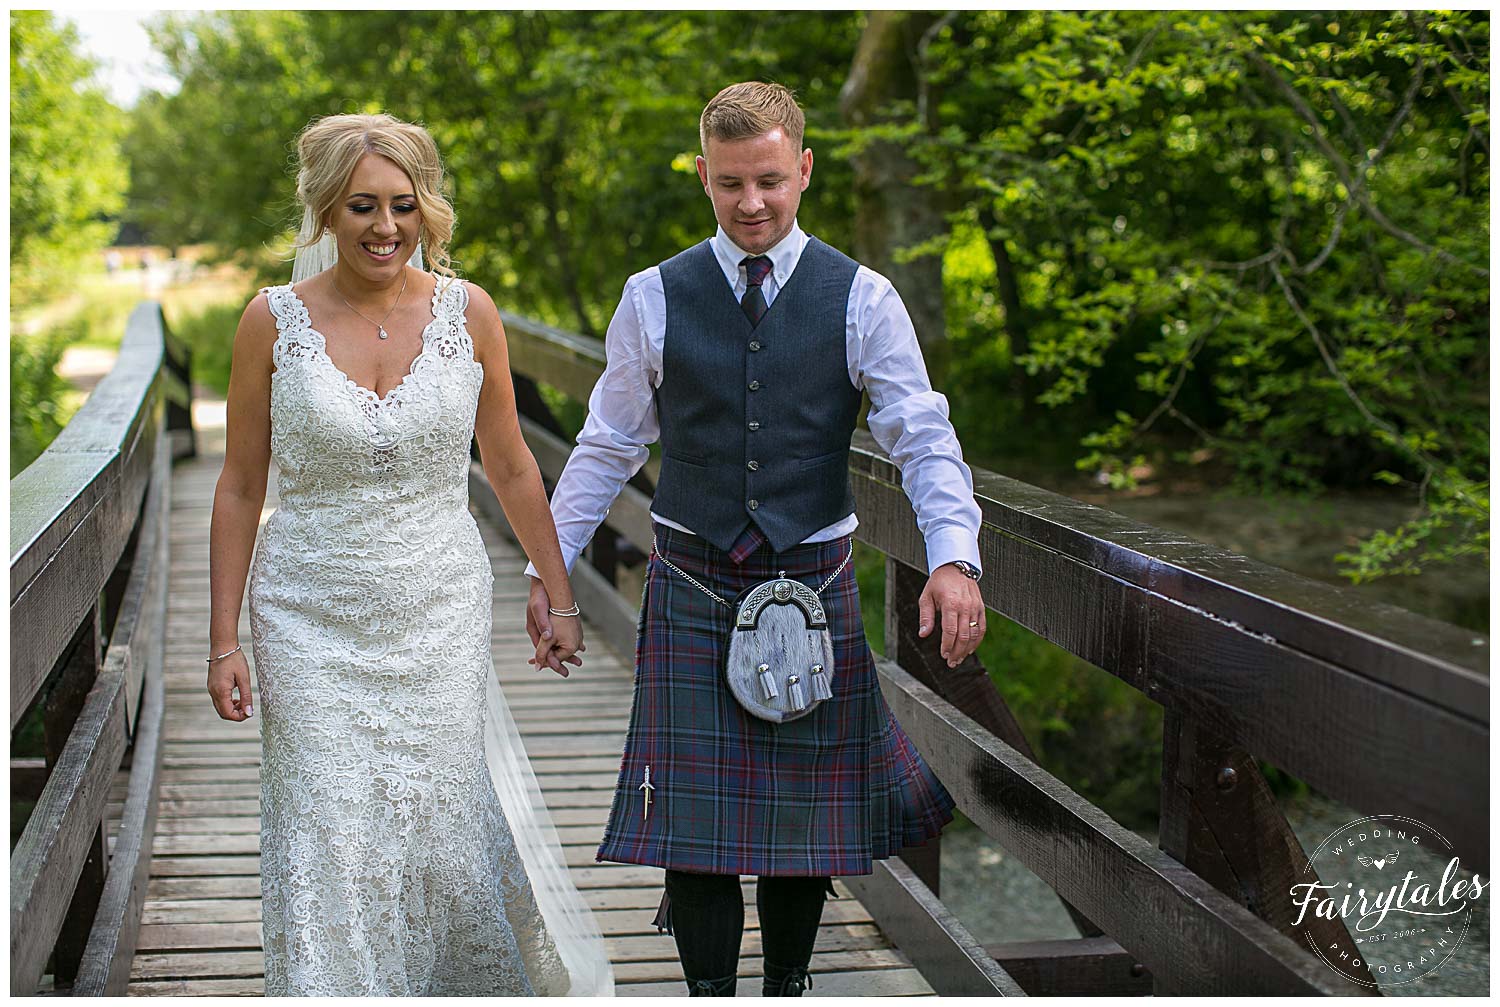 Bride and groom walking on wooden bridge in luss